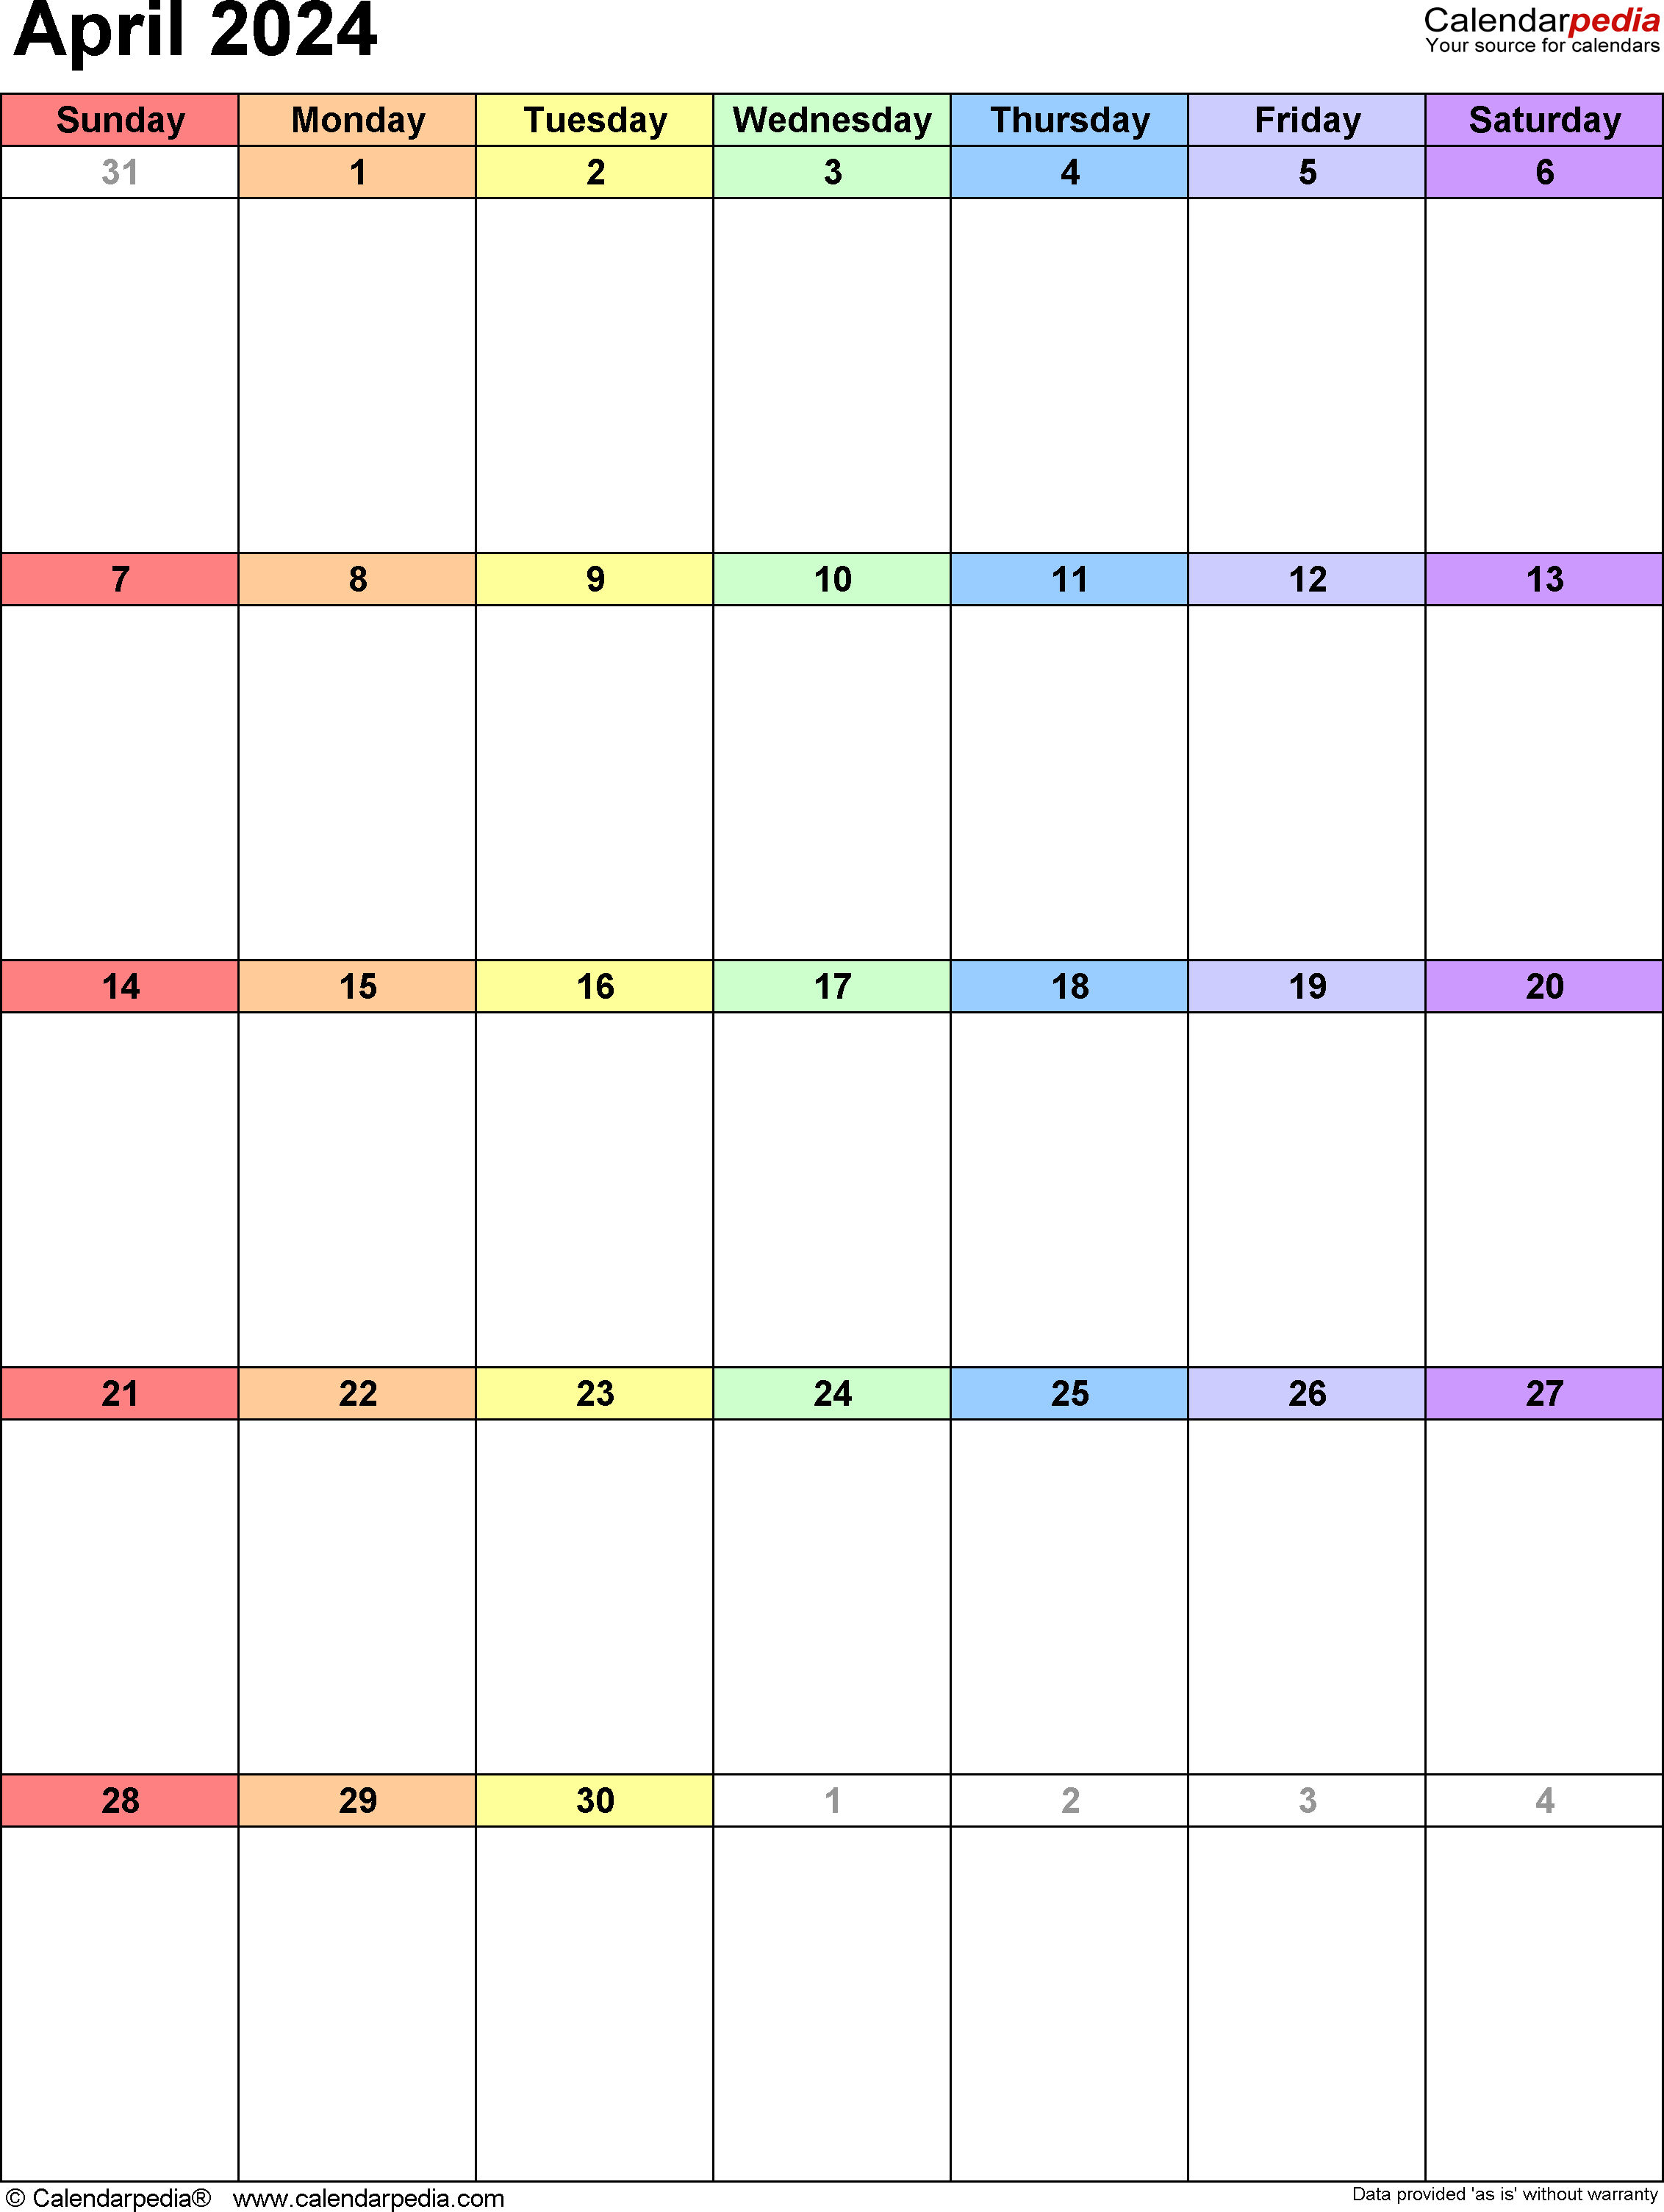 April 2024 Calendar | Templates For Word, Excel And Pdf throughout April 2024 Vertical Calendar